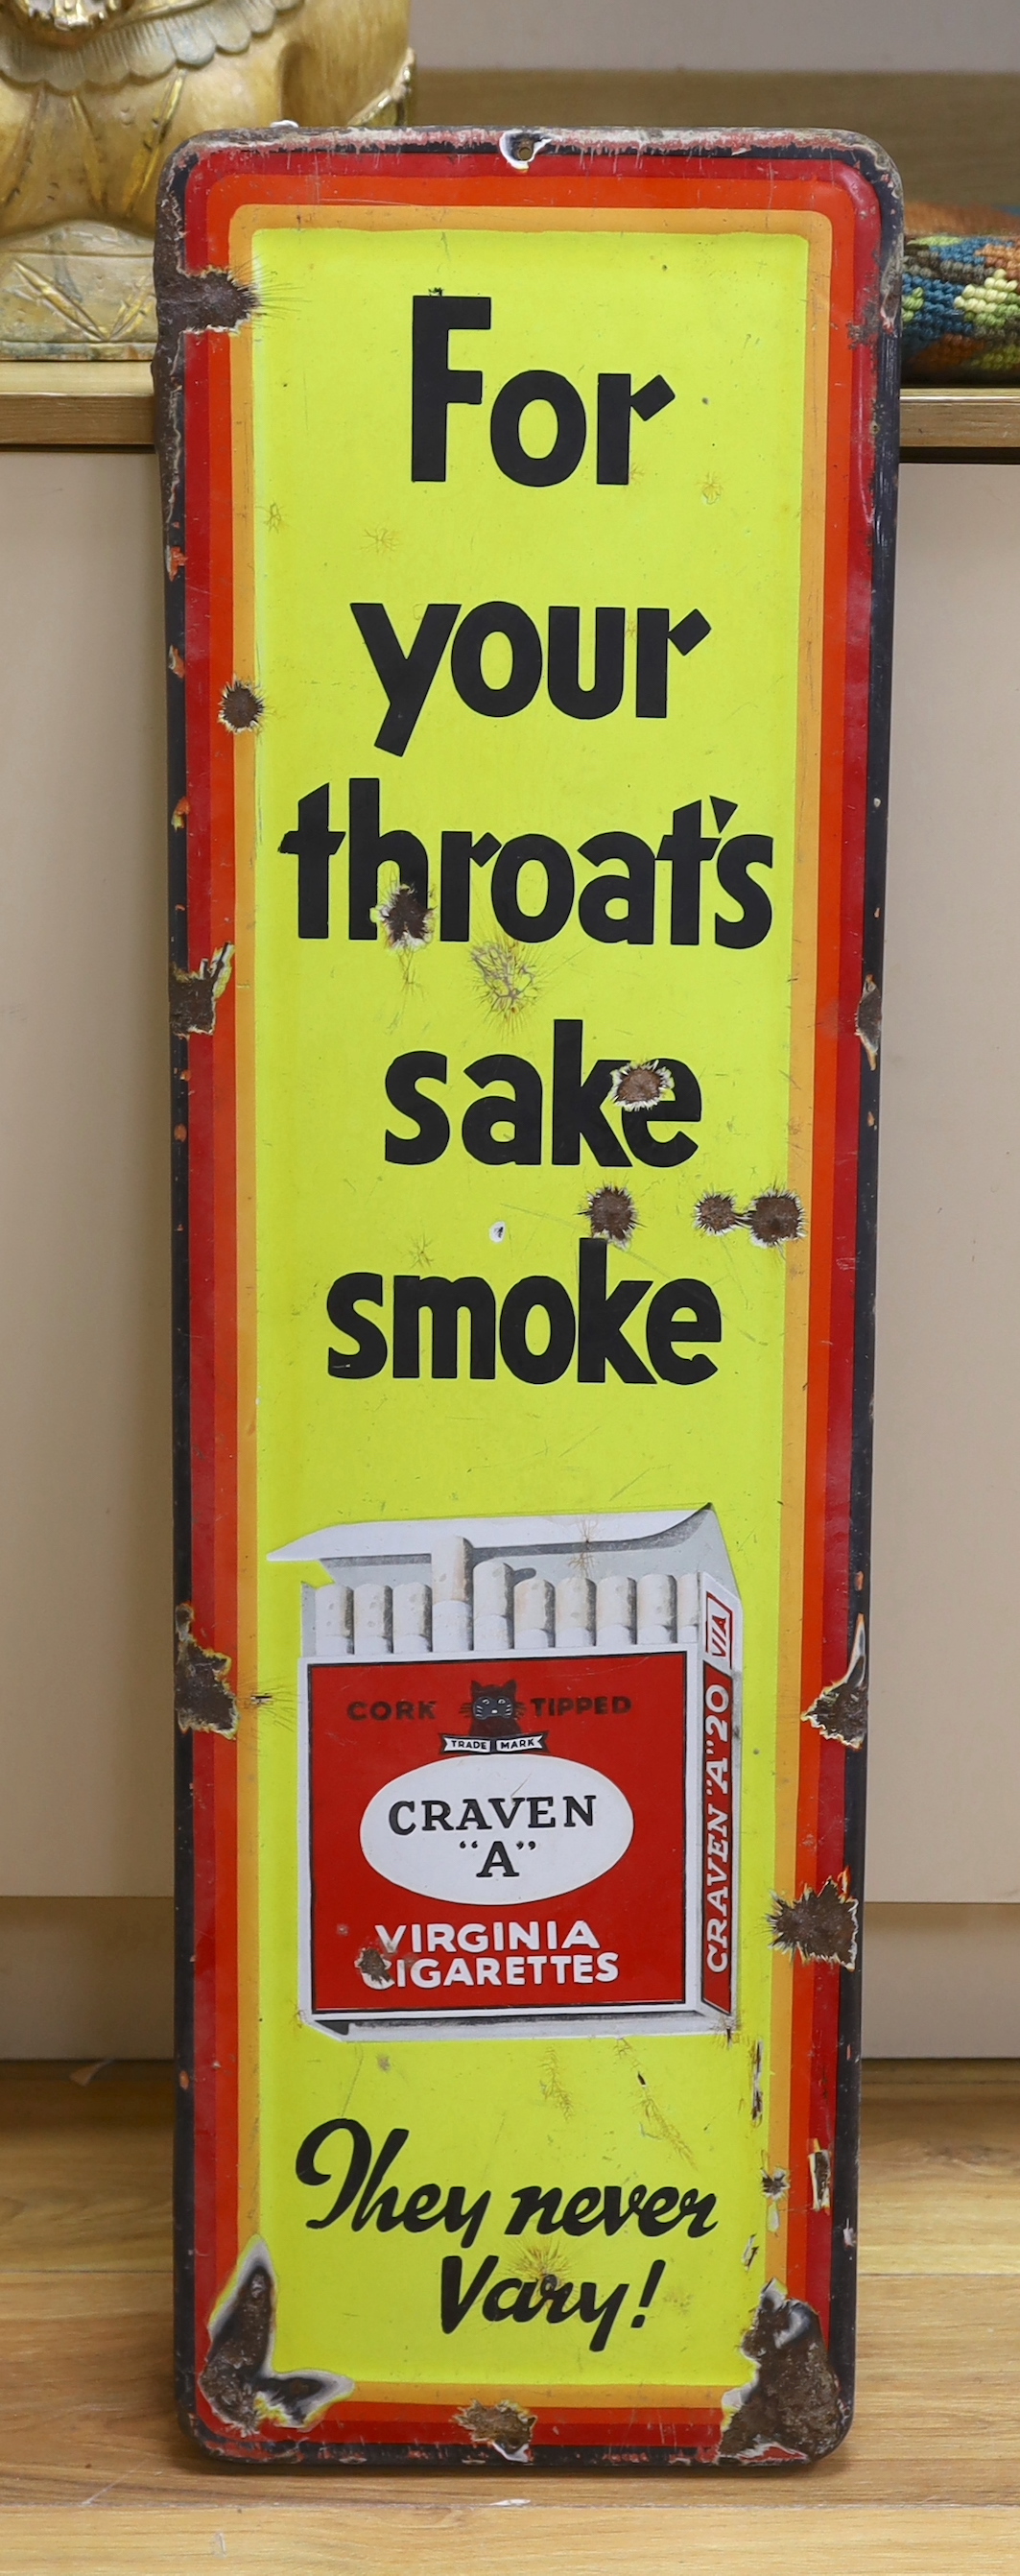 A ‘For your throats sake smoke Craven “A”’ enamel sign, 95x29cm